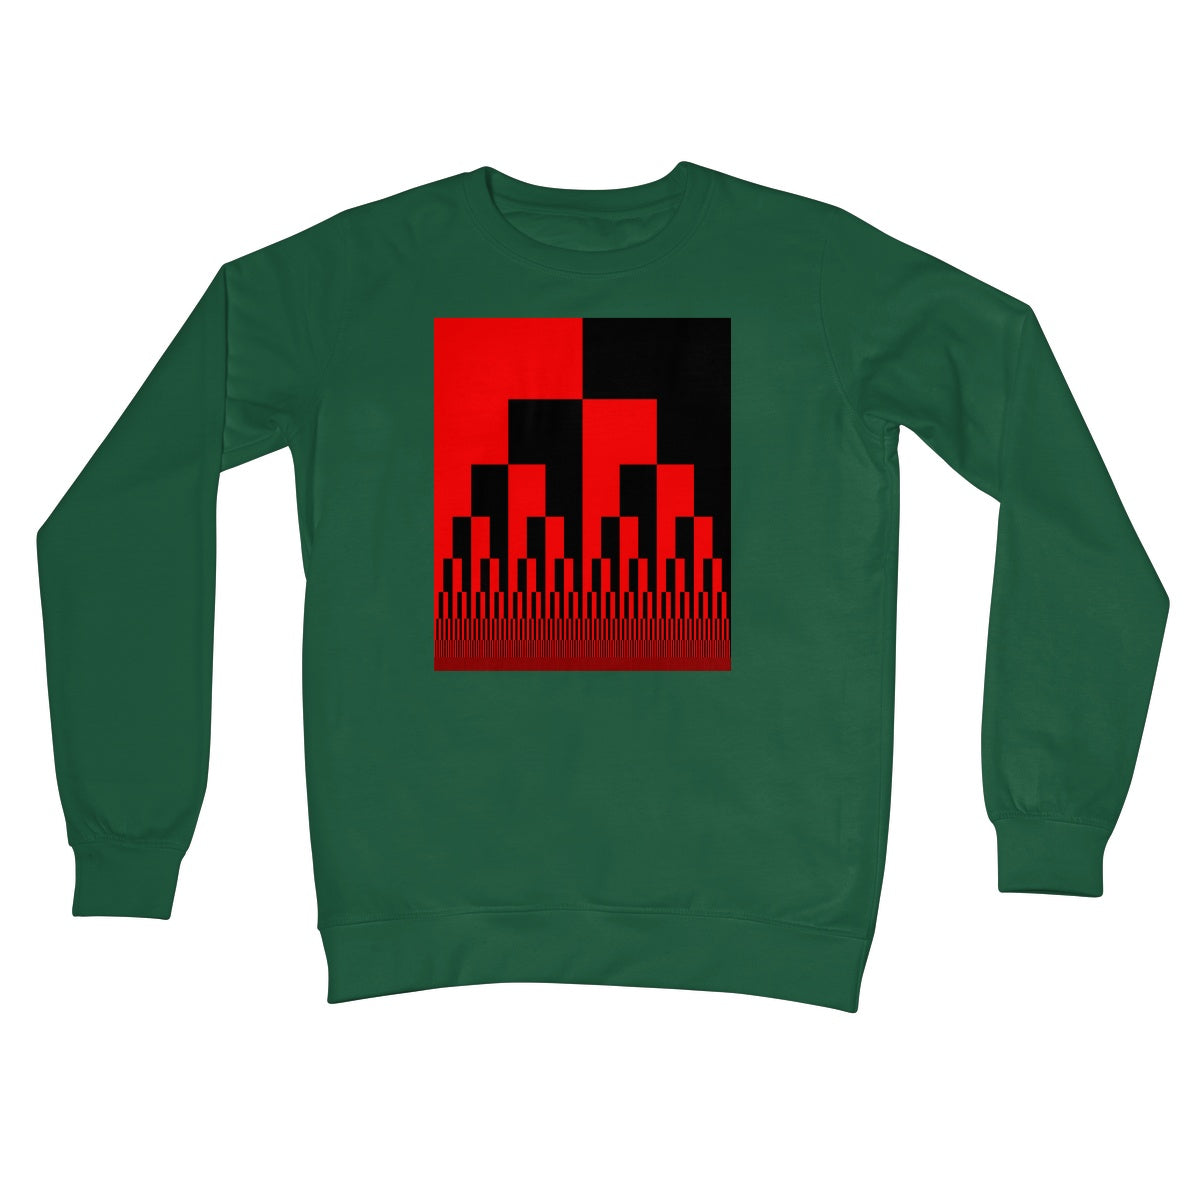 Binary Cascade, Red and Black Crew Neck Sweatshirt